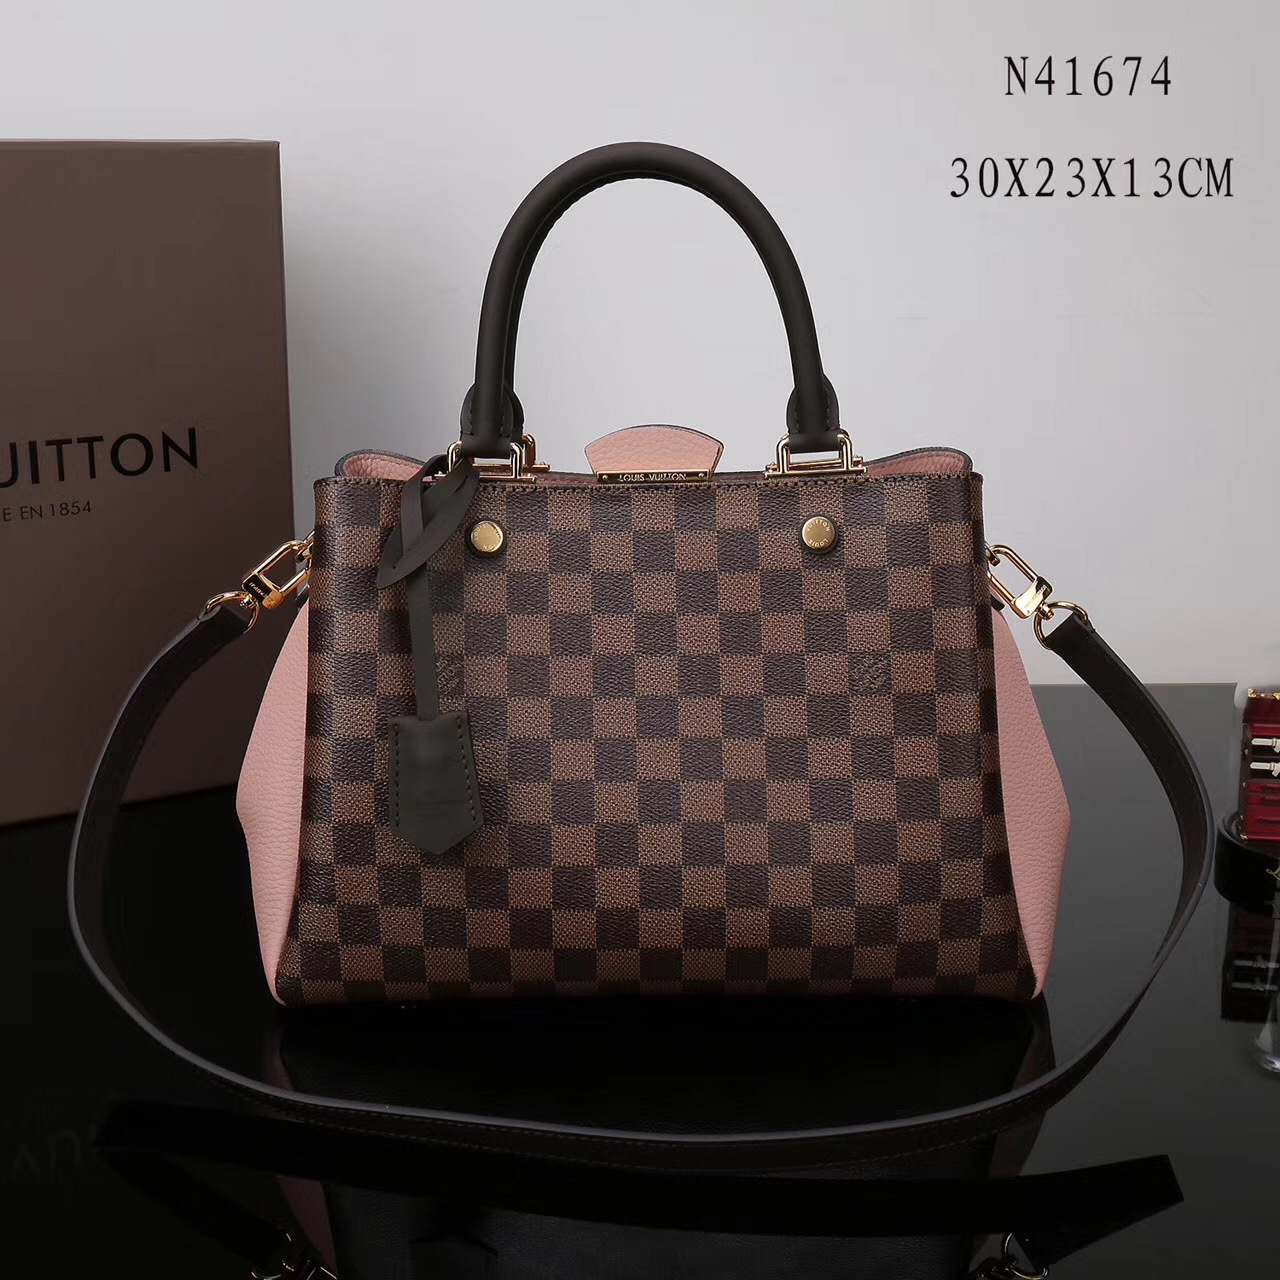 LV Louis Vuitton N41674 Damier Brittany Handbags bags Pink